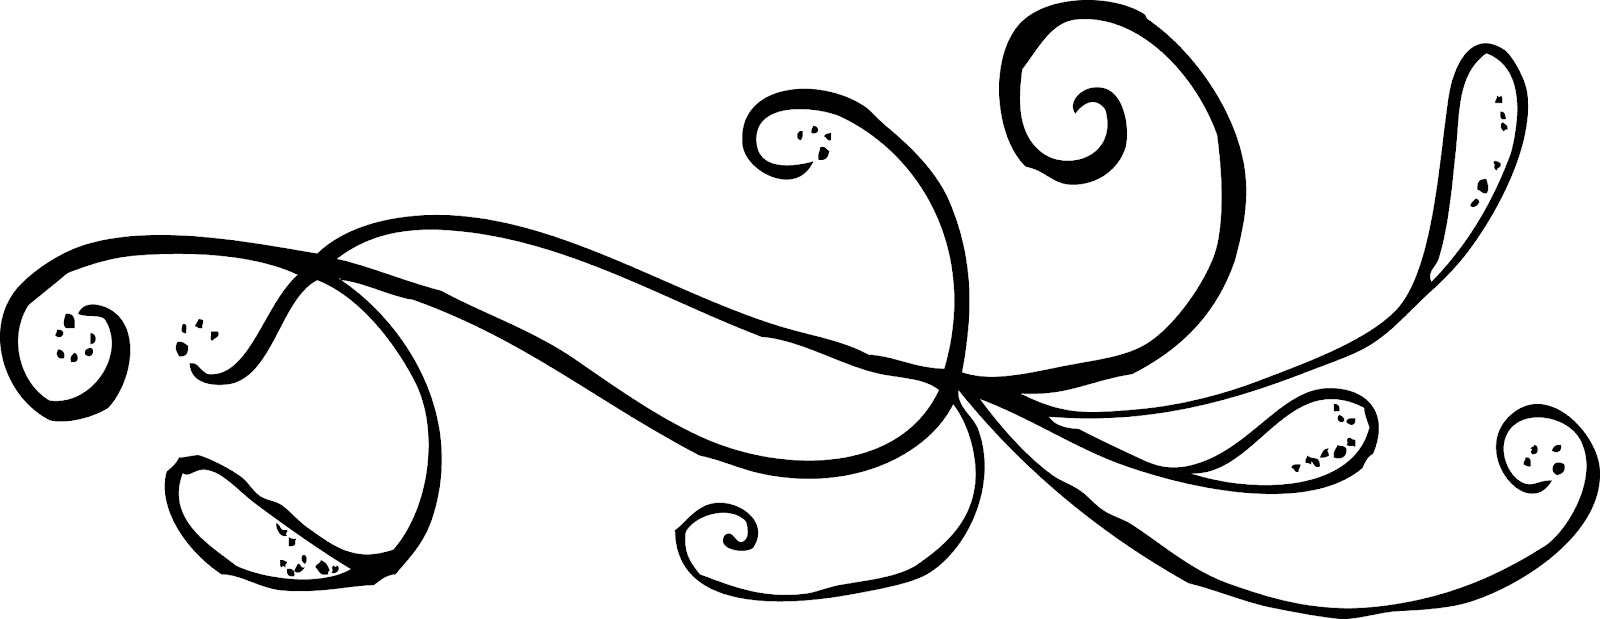 Swirly Lines Clip Art - ClipArt Best